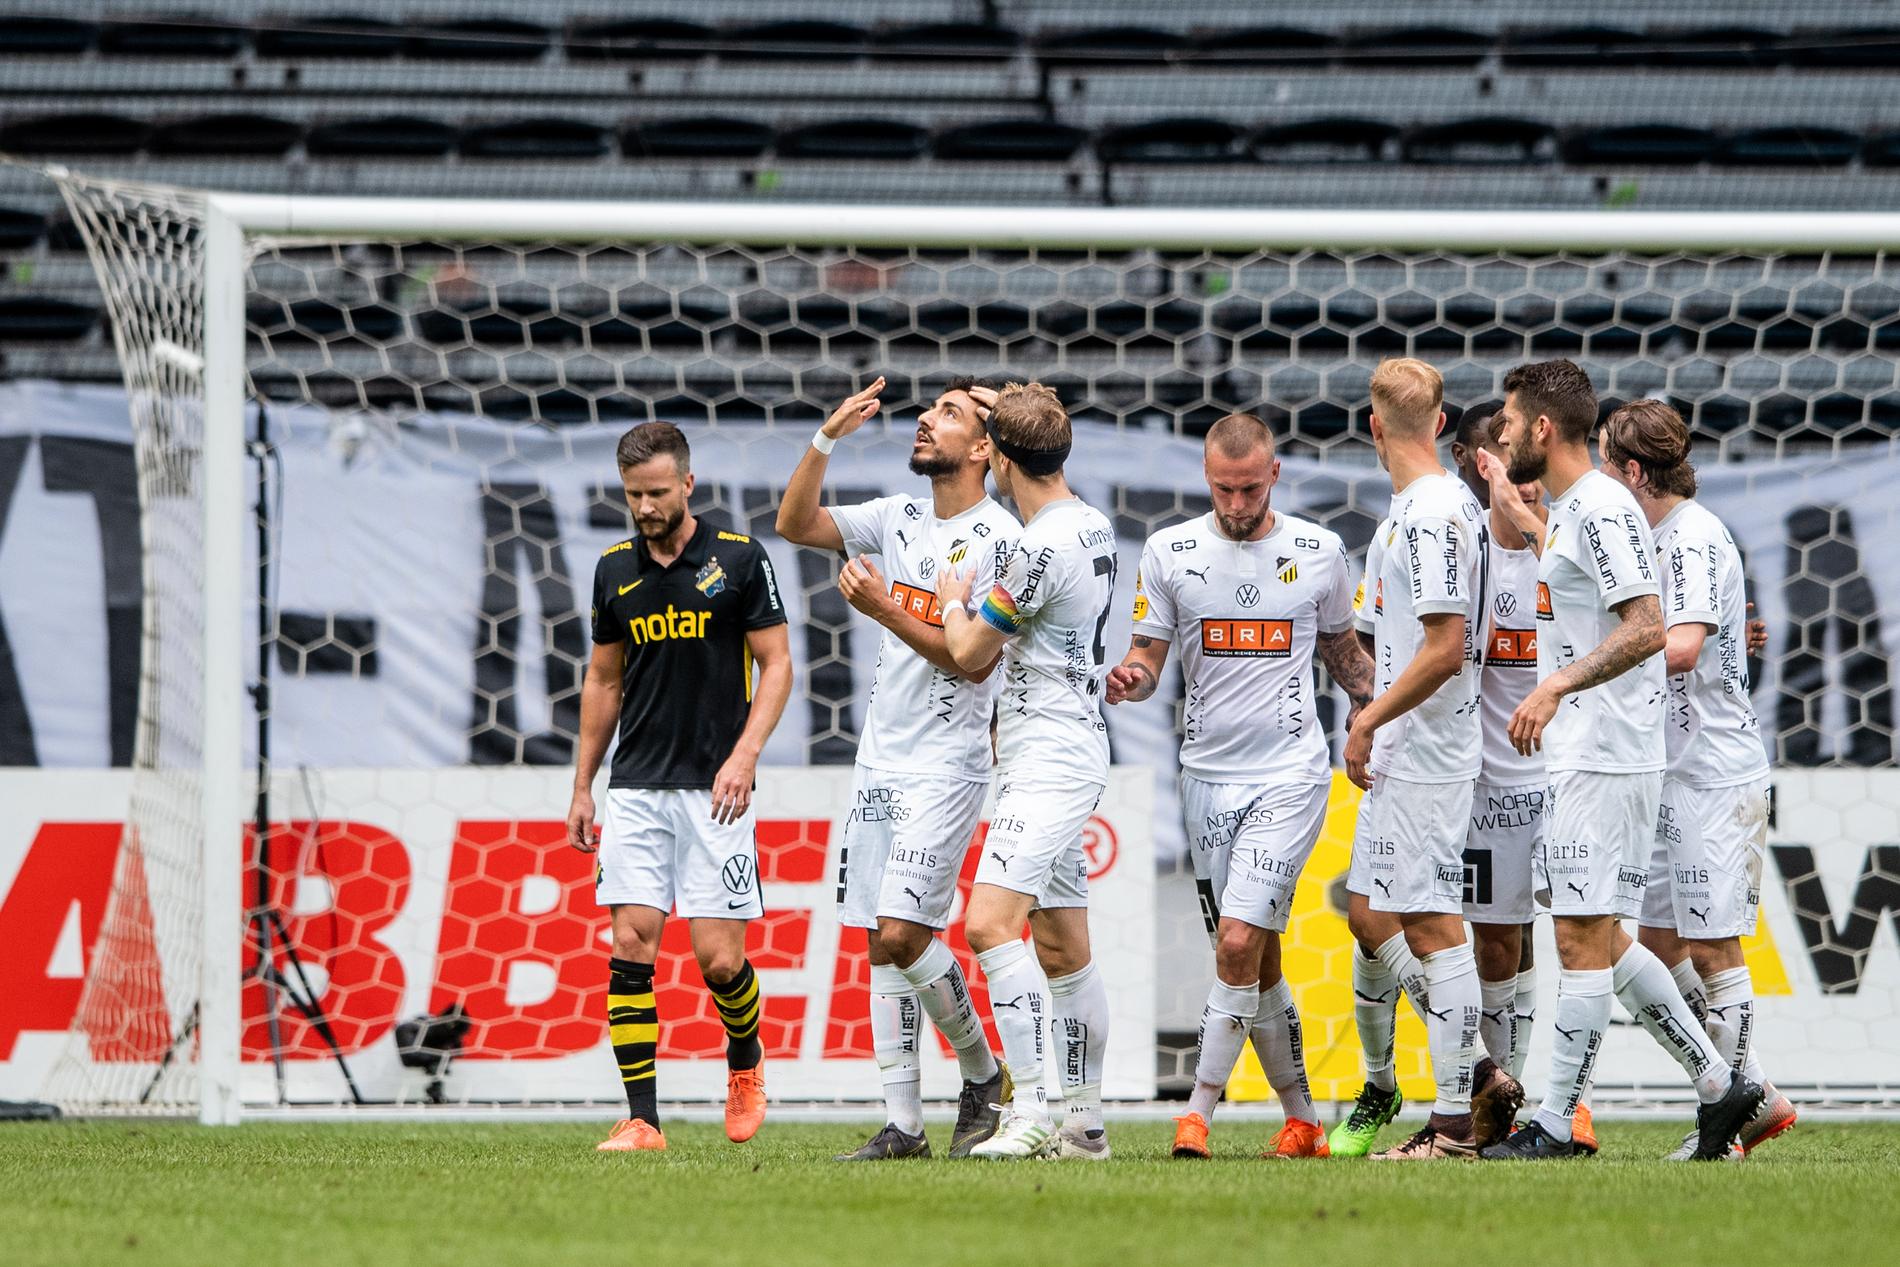 Daleho Irandust blev matchens enda målskytt mot AIK. 